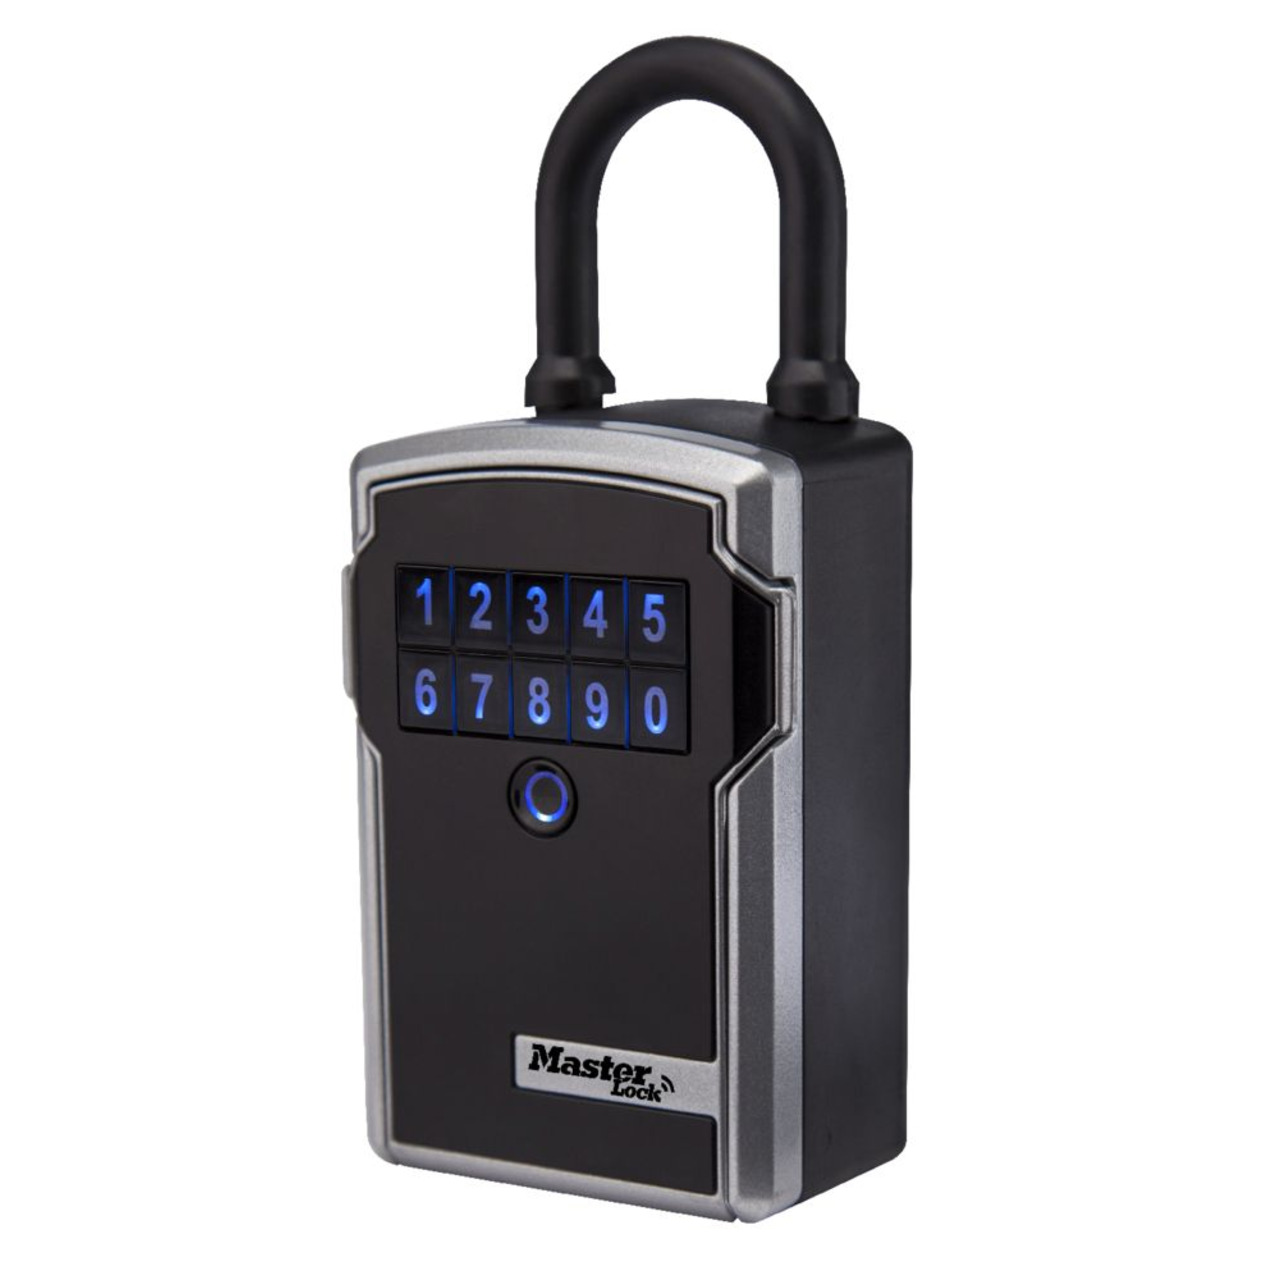 Master Lock Bluetooth-Schlsselsafe mit Bgel 5440EURD Select Access SMART- Zugriff per Smartphone